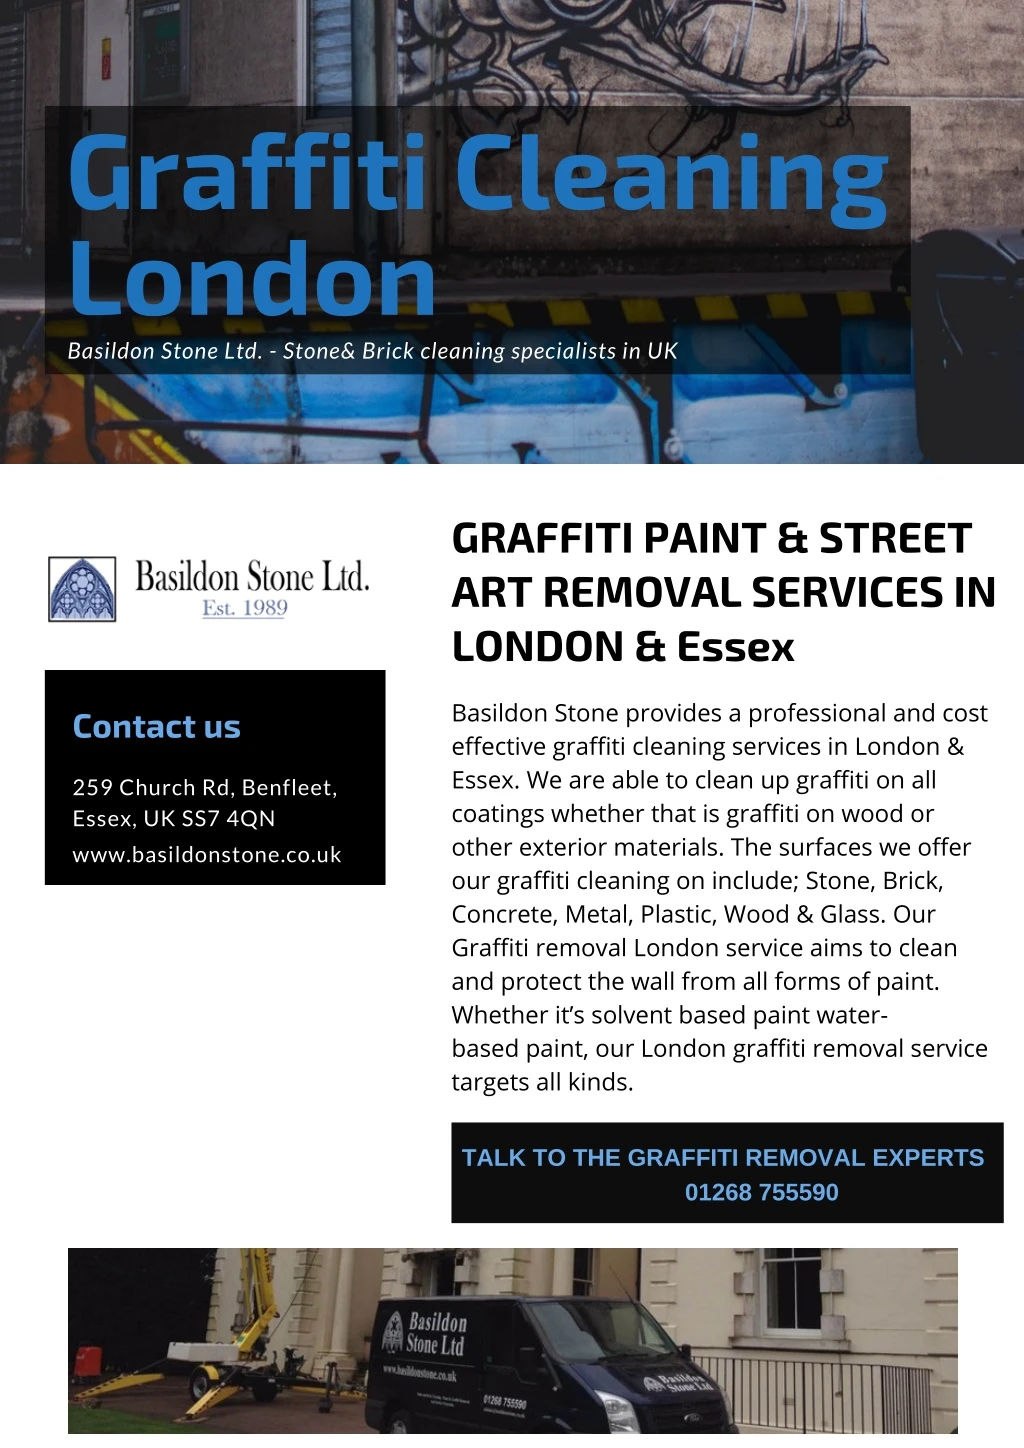 graffiti cleaning london basildon stone ltd stone